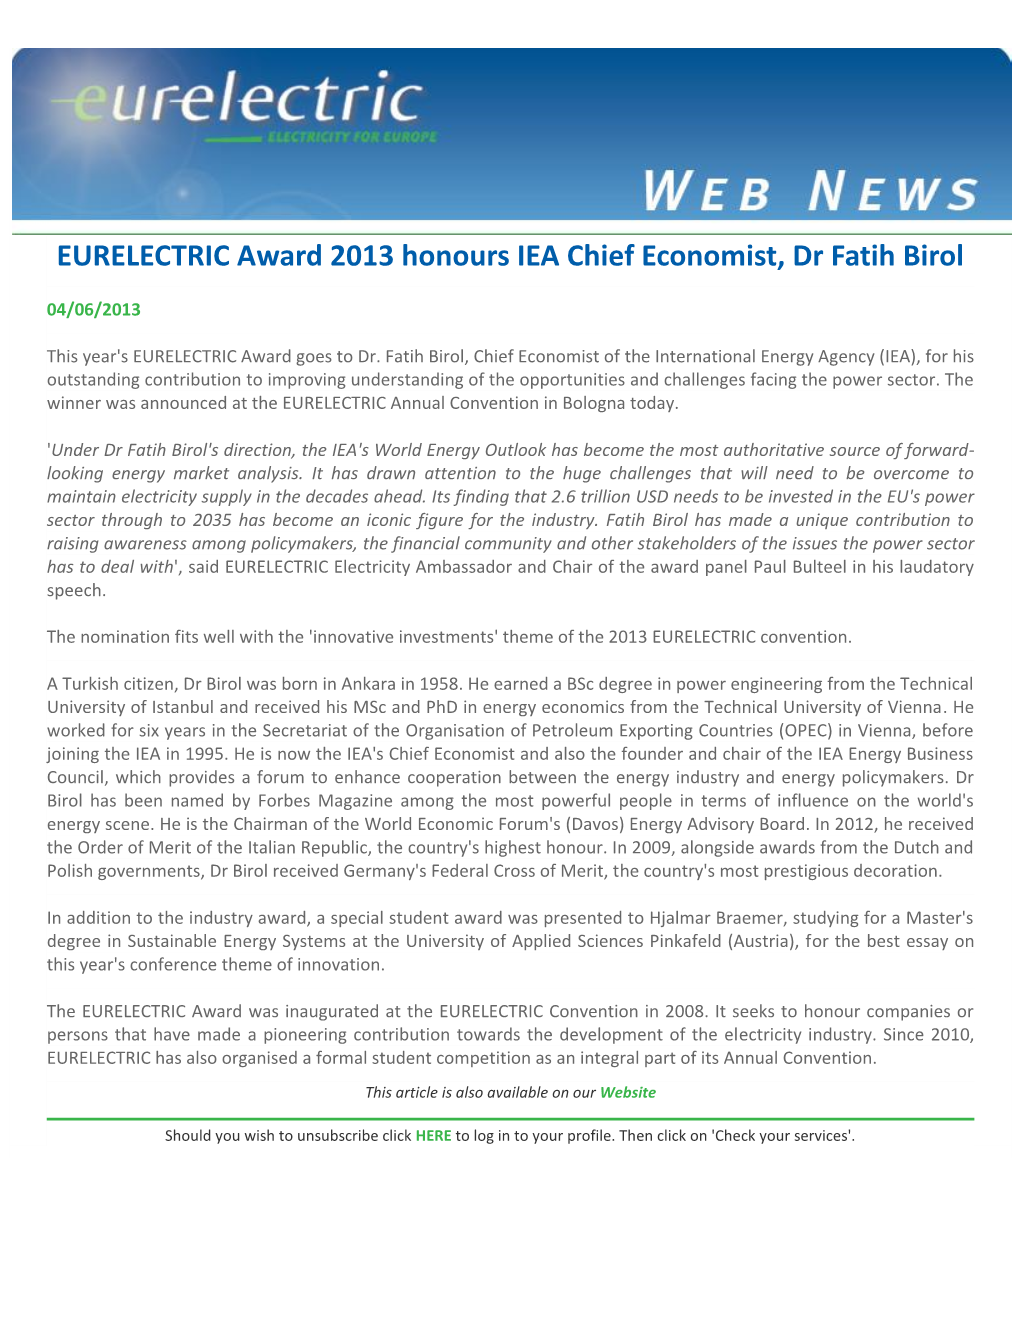 EURELECTRIC Award 2013 Honours IEA Chief Economist, Dr Fatih Birol